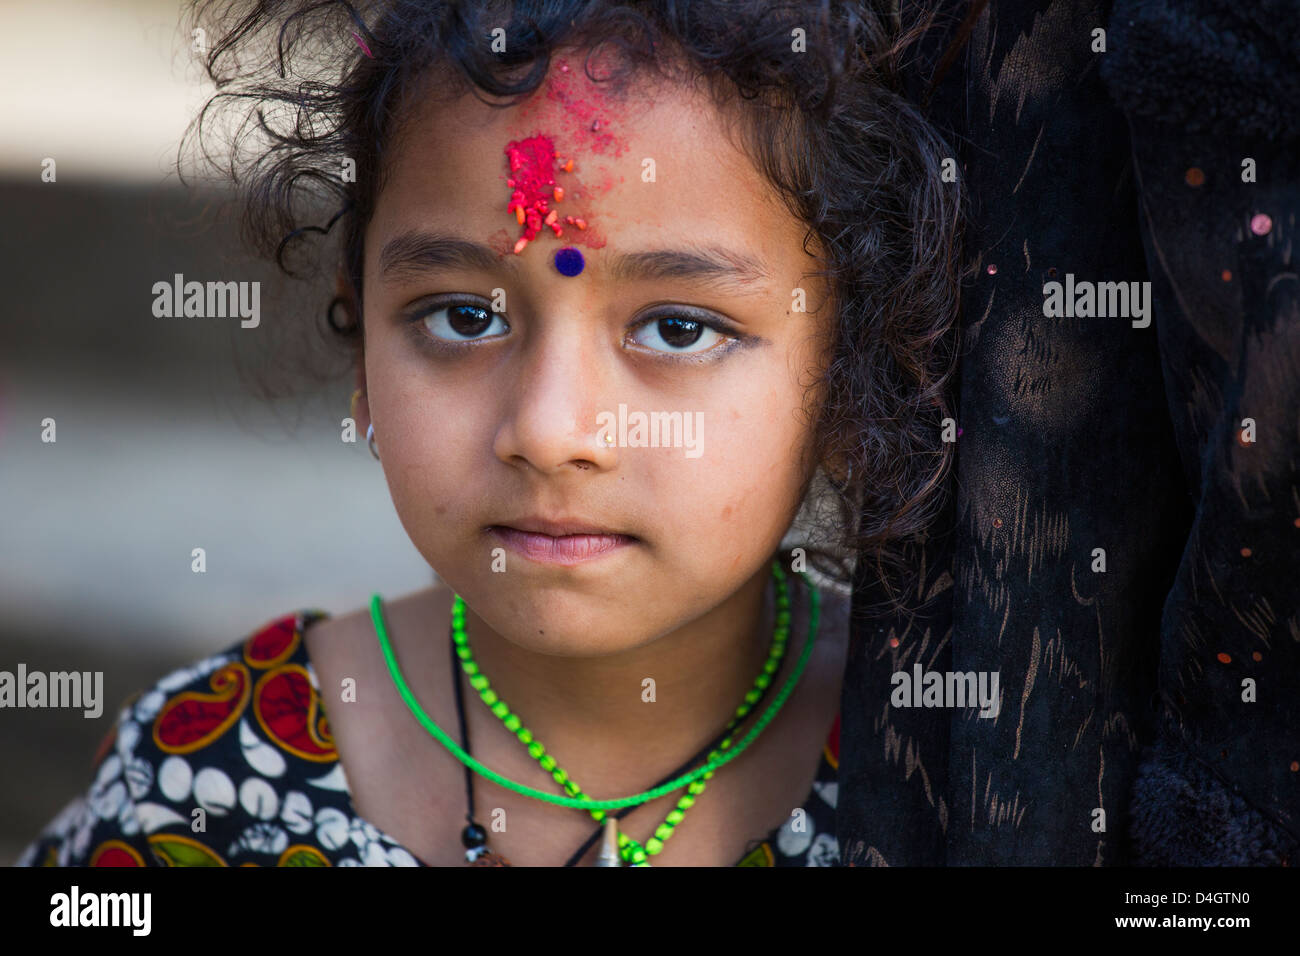 Hindu girl, Prithbhinarayan or Prithvinarayan Hindu Temple, Gorkha Durbar, Gorkha, Nepal Stock Photo